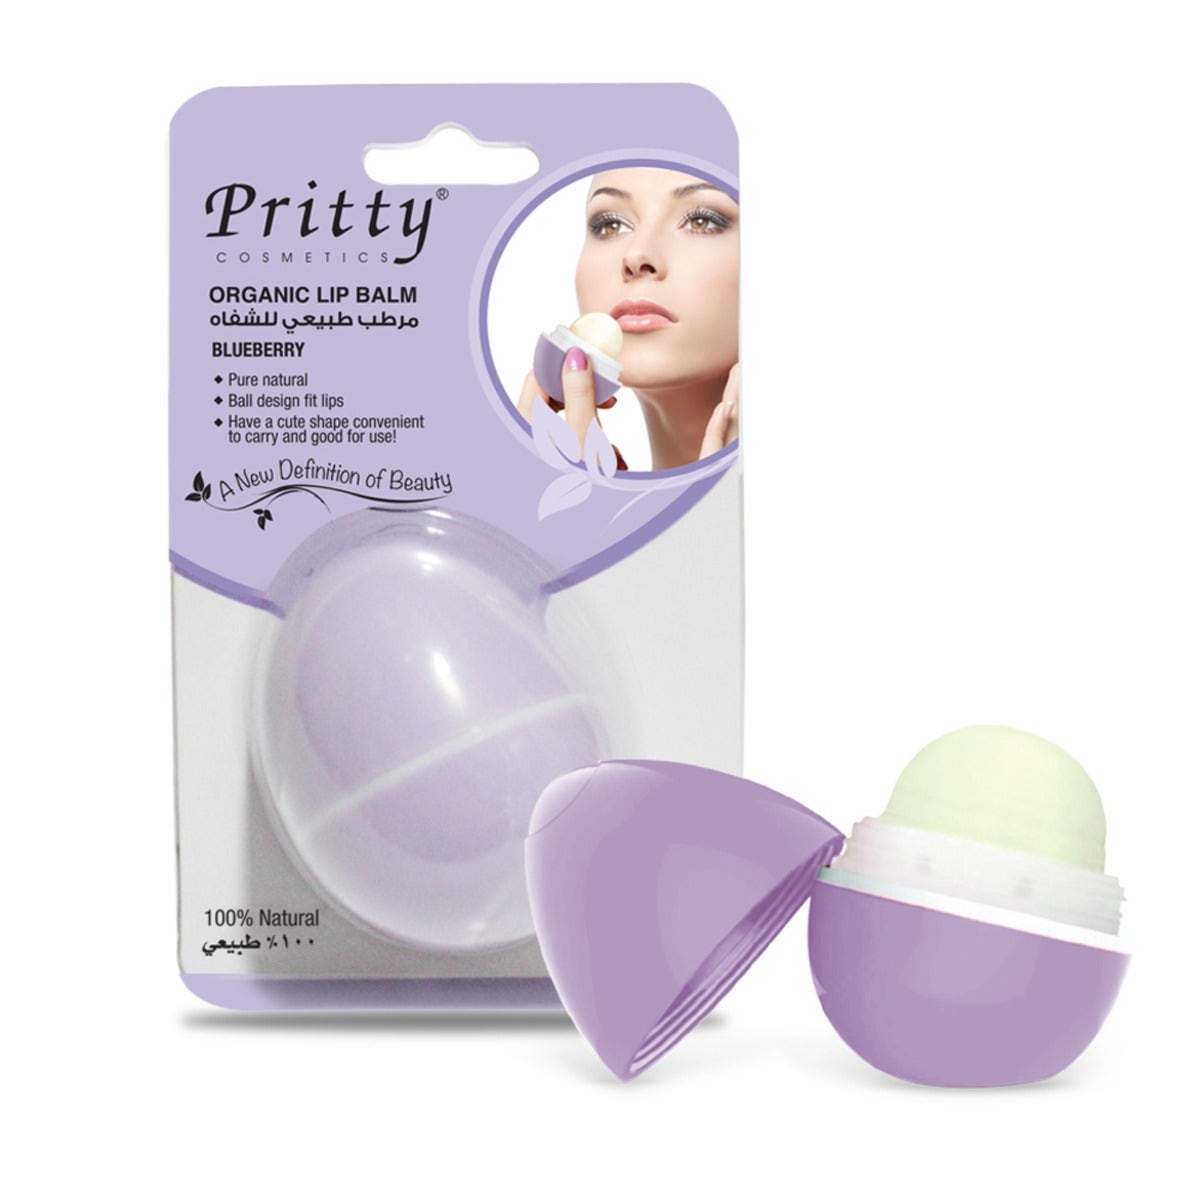 Pritty Cosmetics Organic Lip Balm